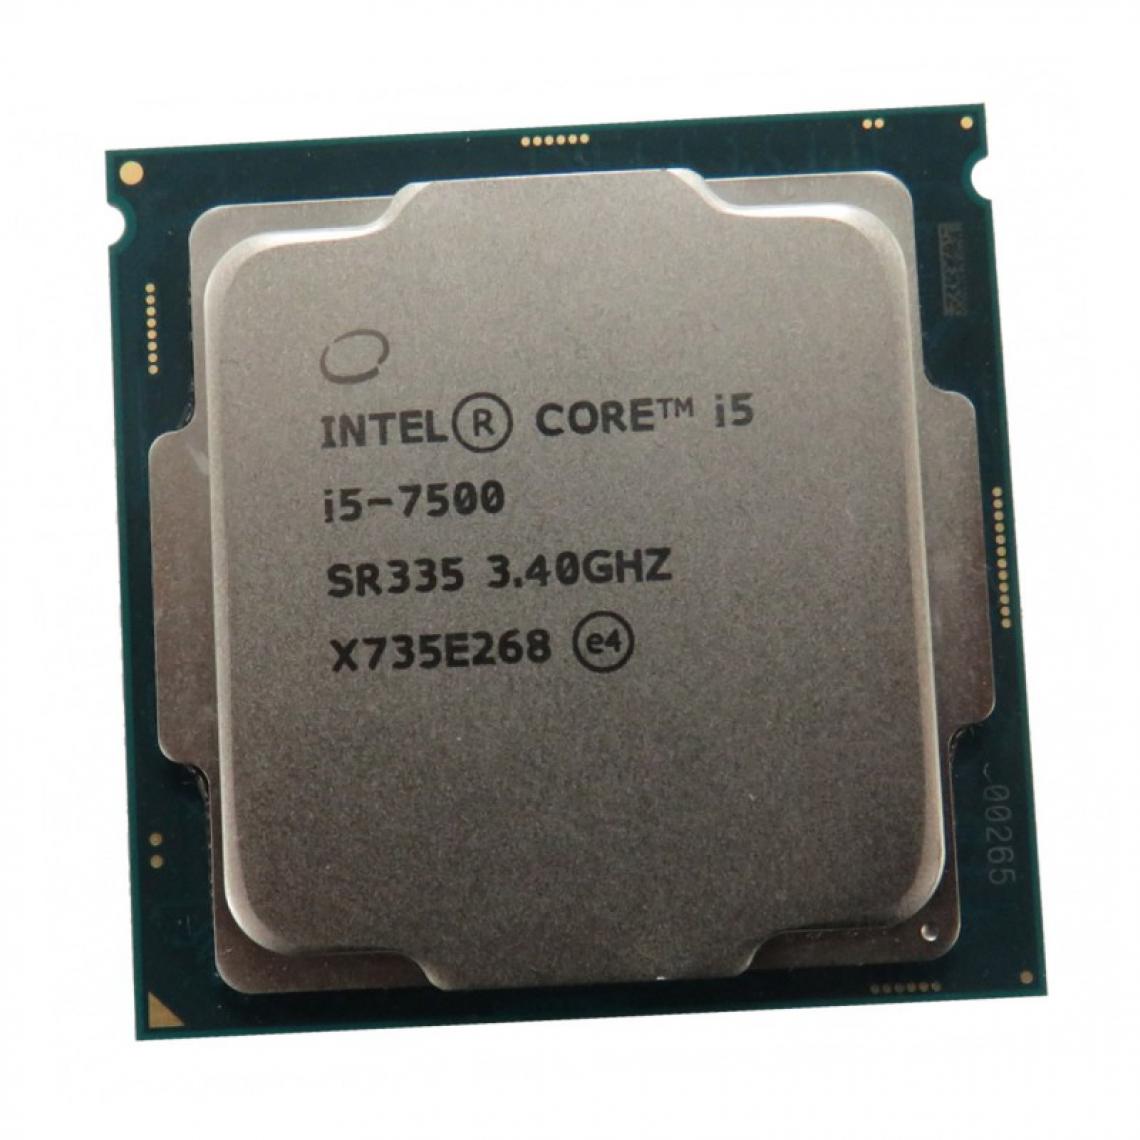 Intel - Processeur CPU Intel Core i5-7500 3.4Ghz 6Mo SR335 FCLGA1151 Quad Core Kaby Lake - Processeur INTEL